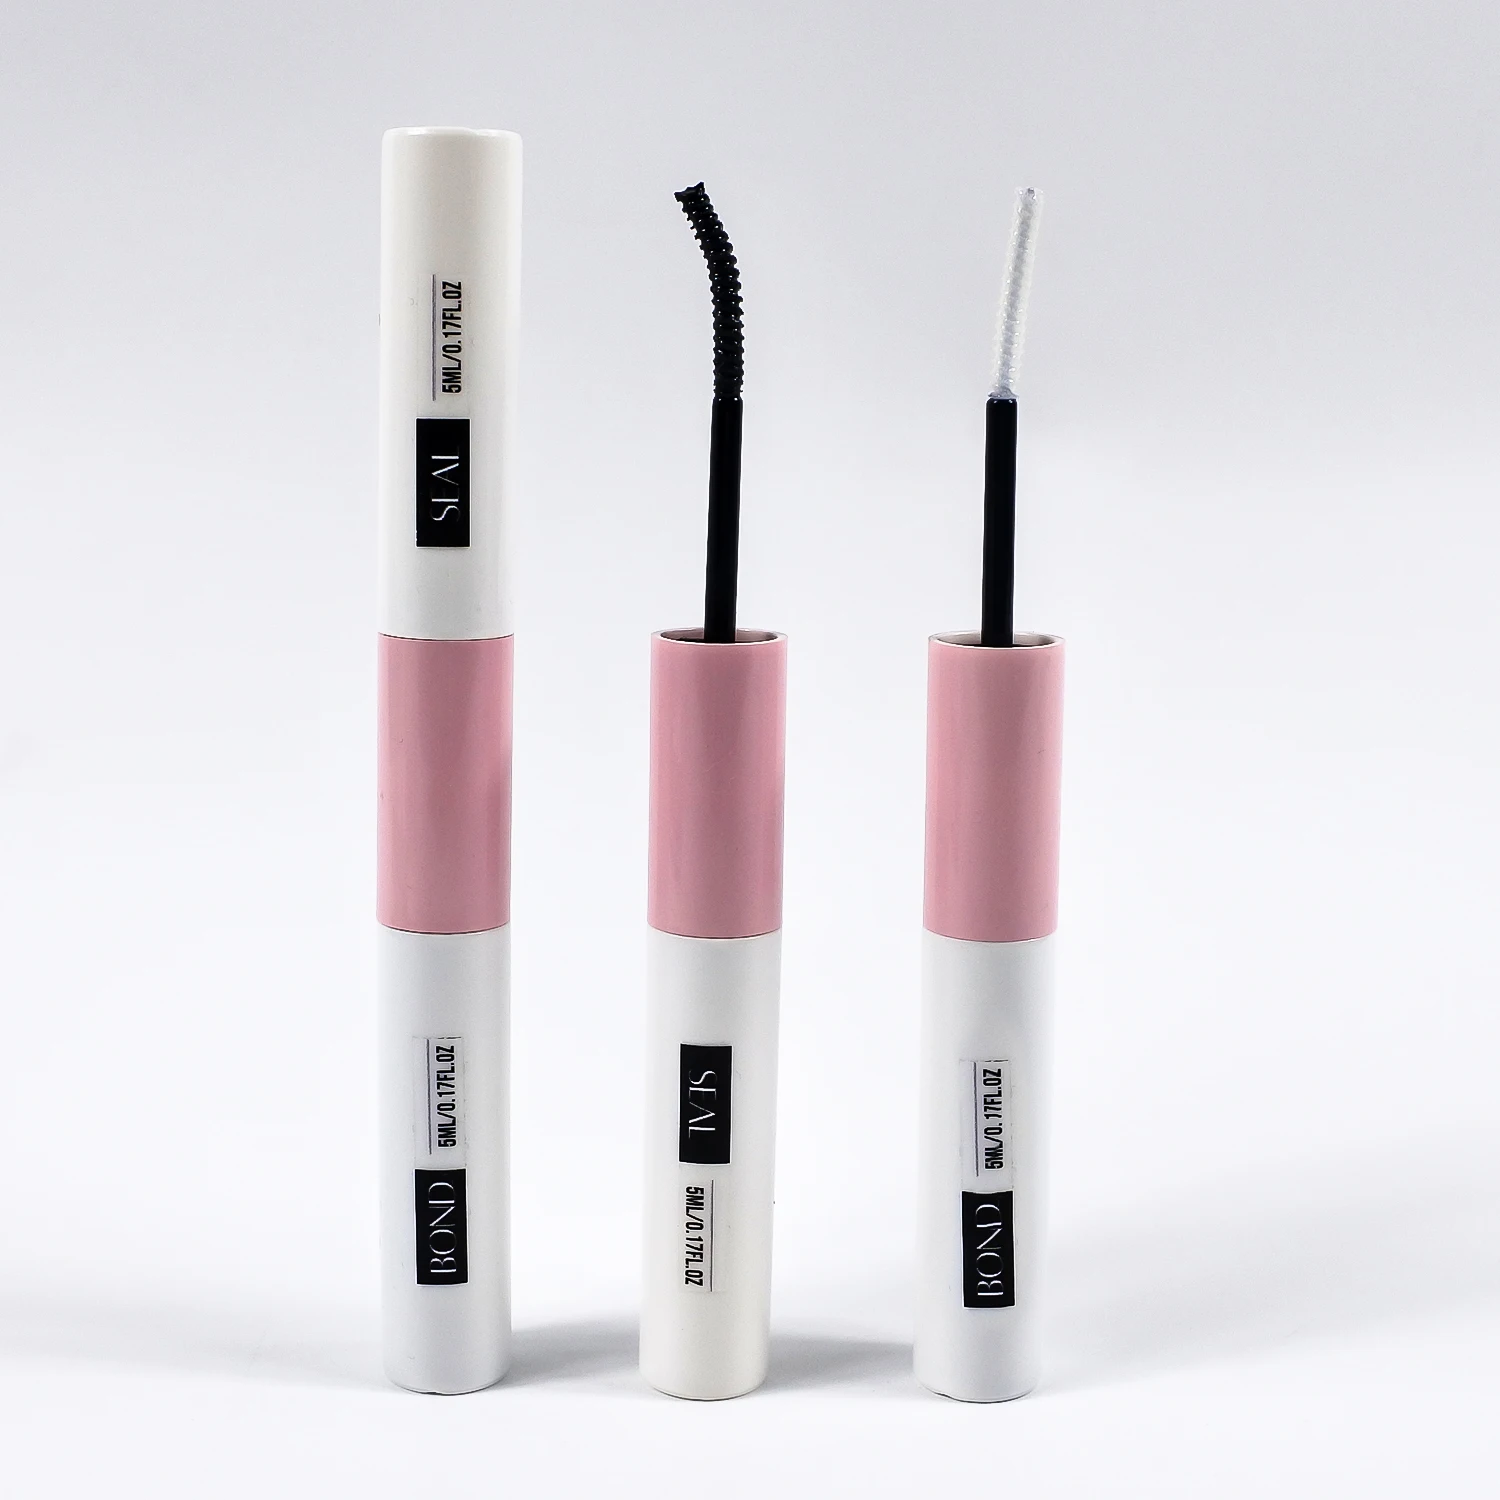 Free Shipping Glue Eyelash Extension Makeup Tool 2 In 1 Bond and Seal Lash Glue Long Lasting adhesives for DIY Lash Clusters